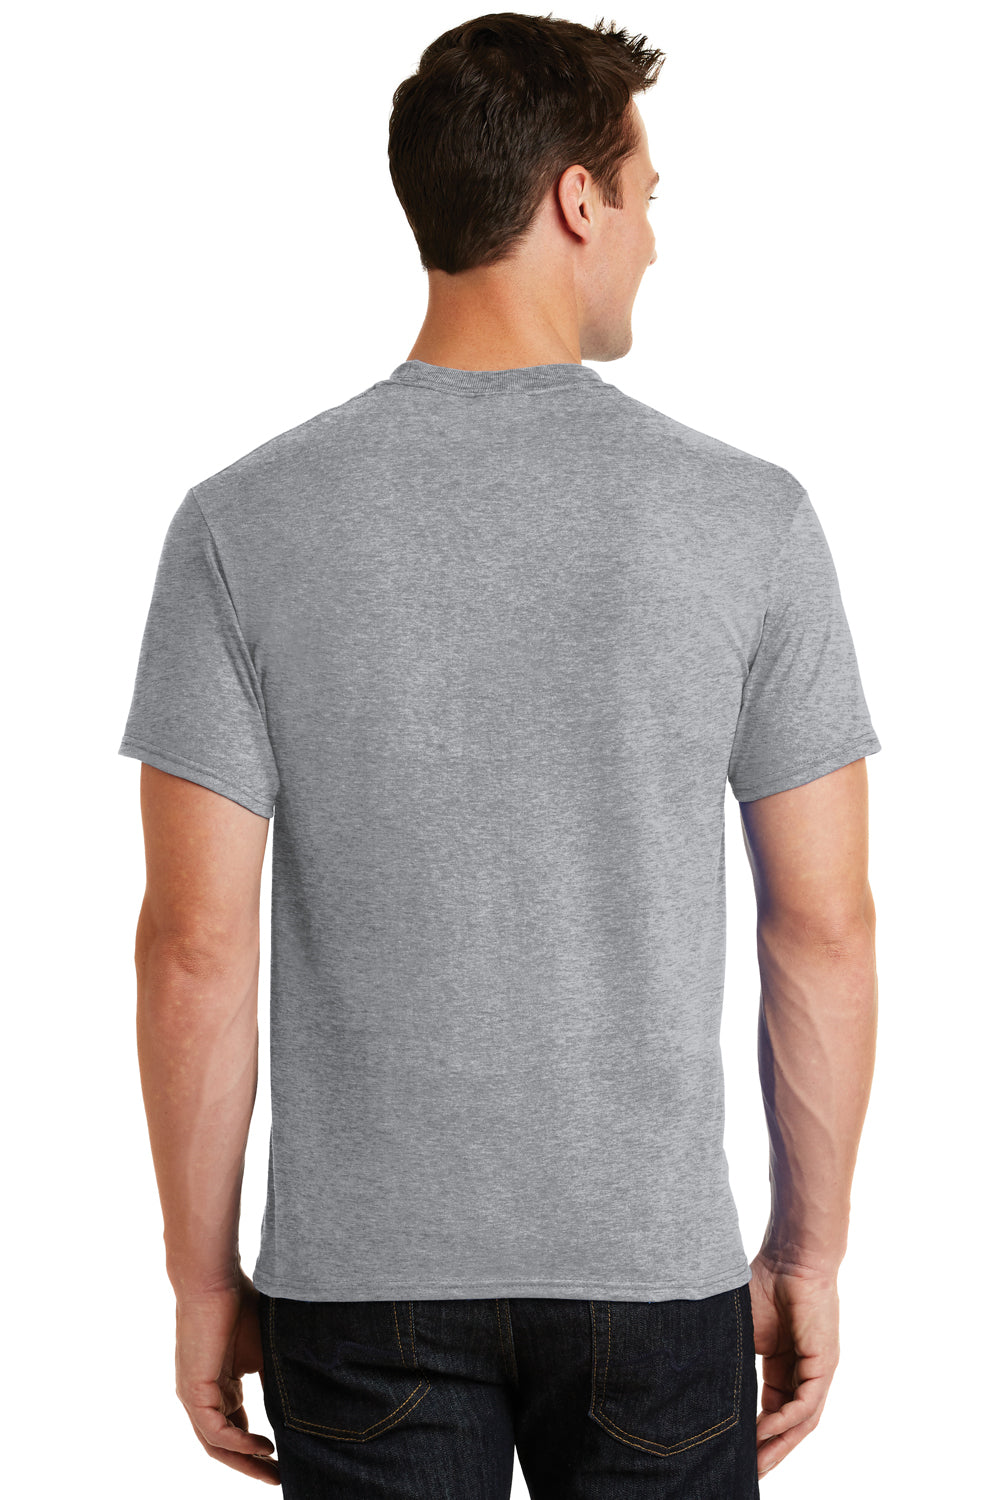 Port & Company PC55 Mens Core Short Sleeve Crewneck T-Shirt Heather Grey Back